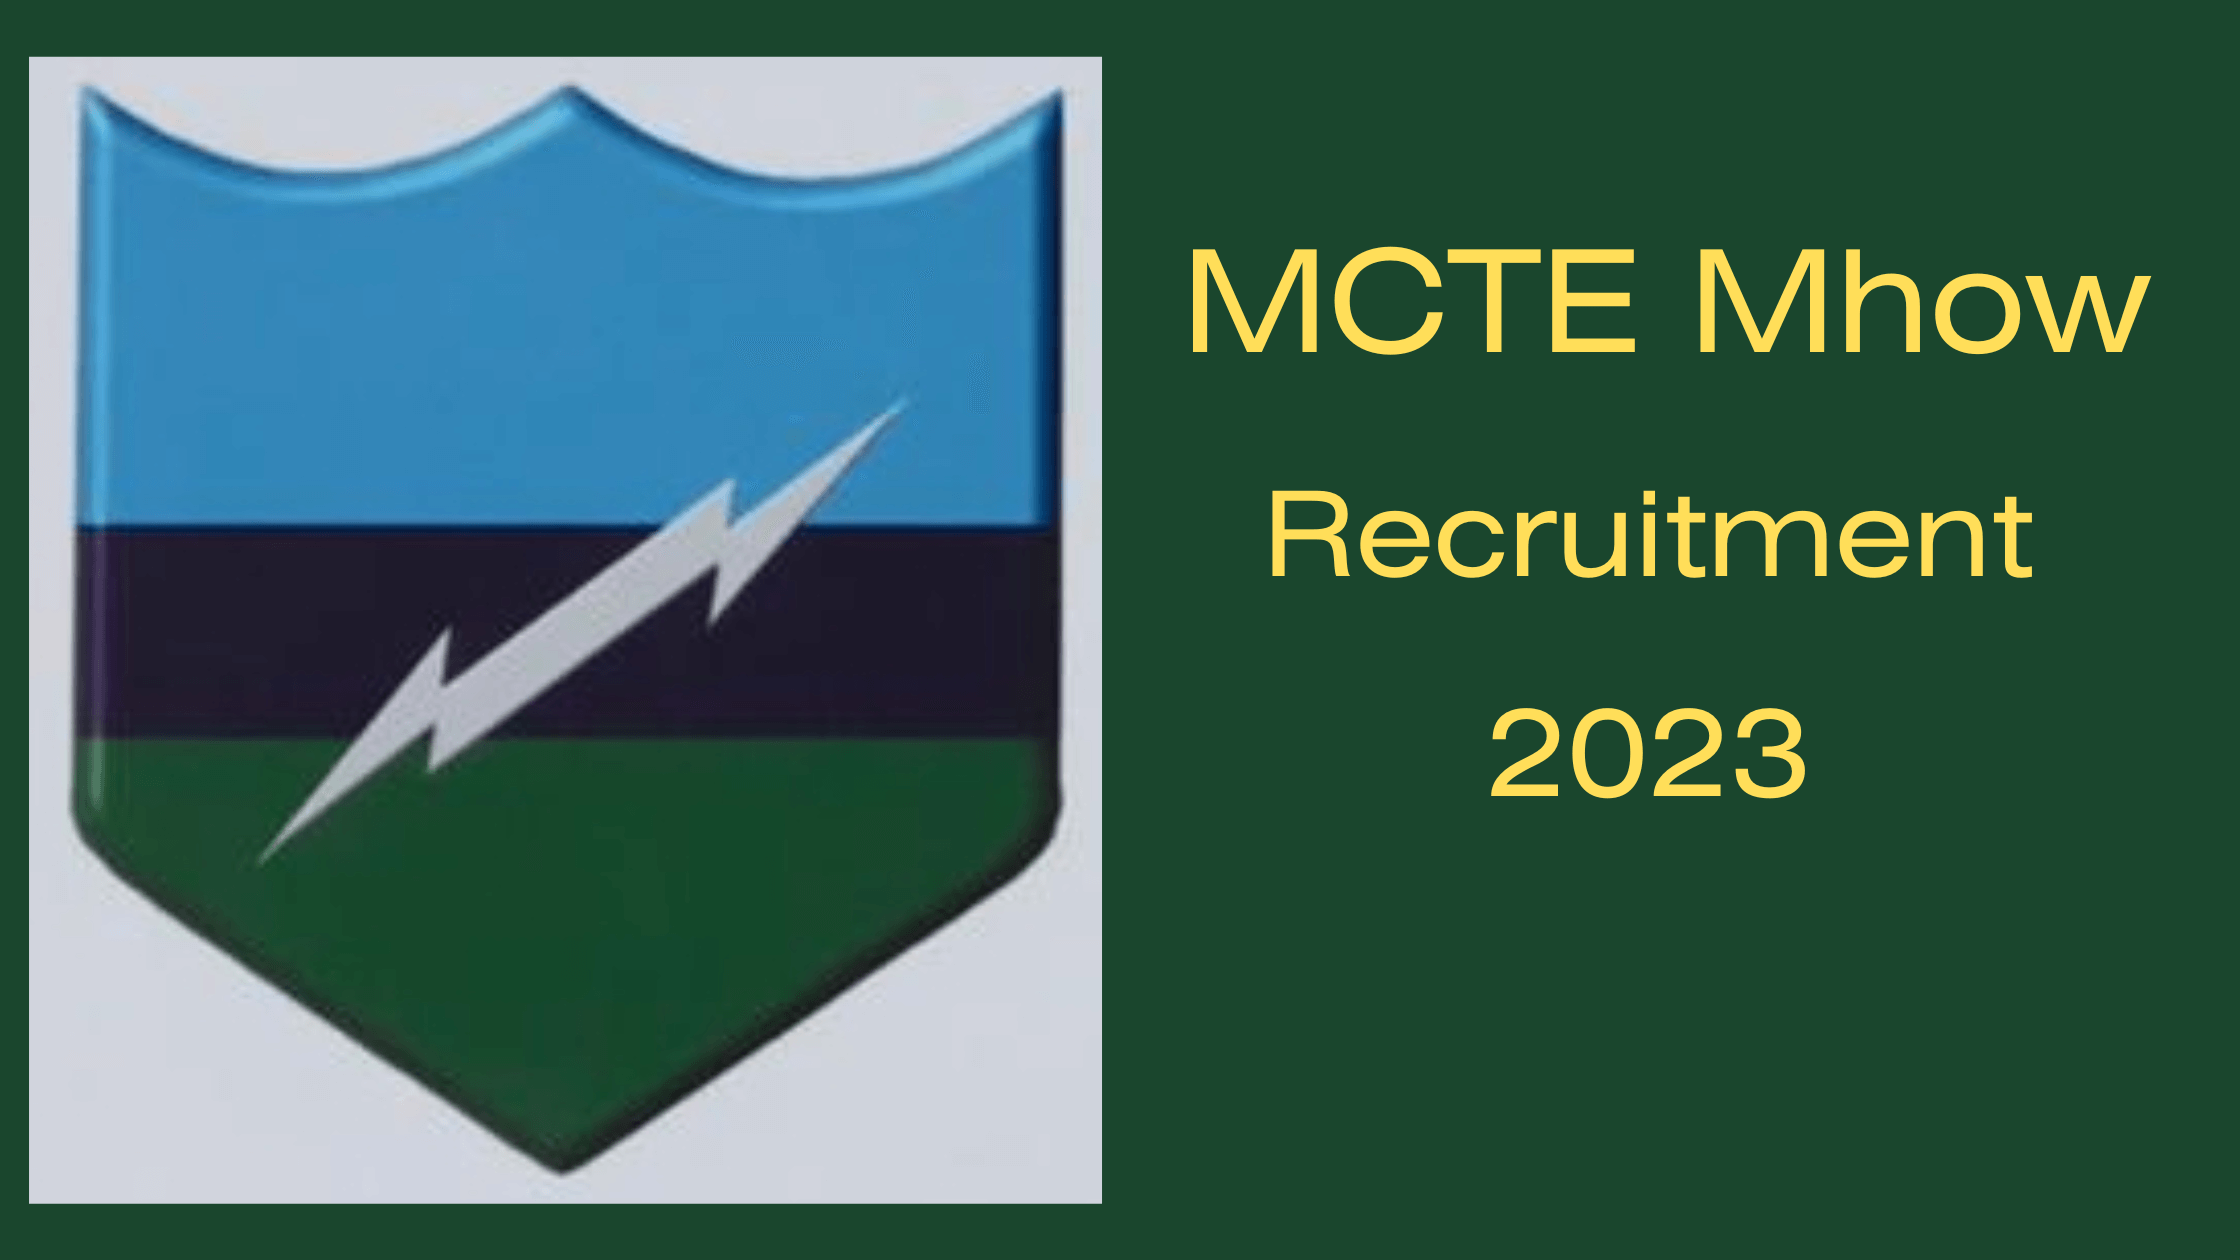 MCTE Mhow Recruitment 2023